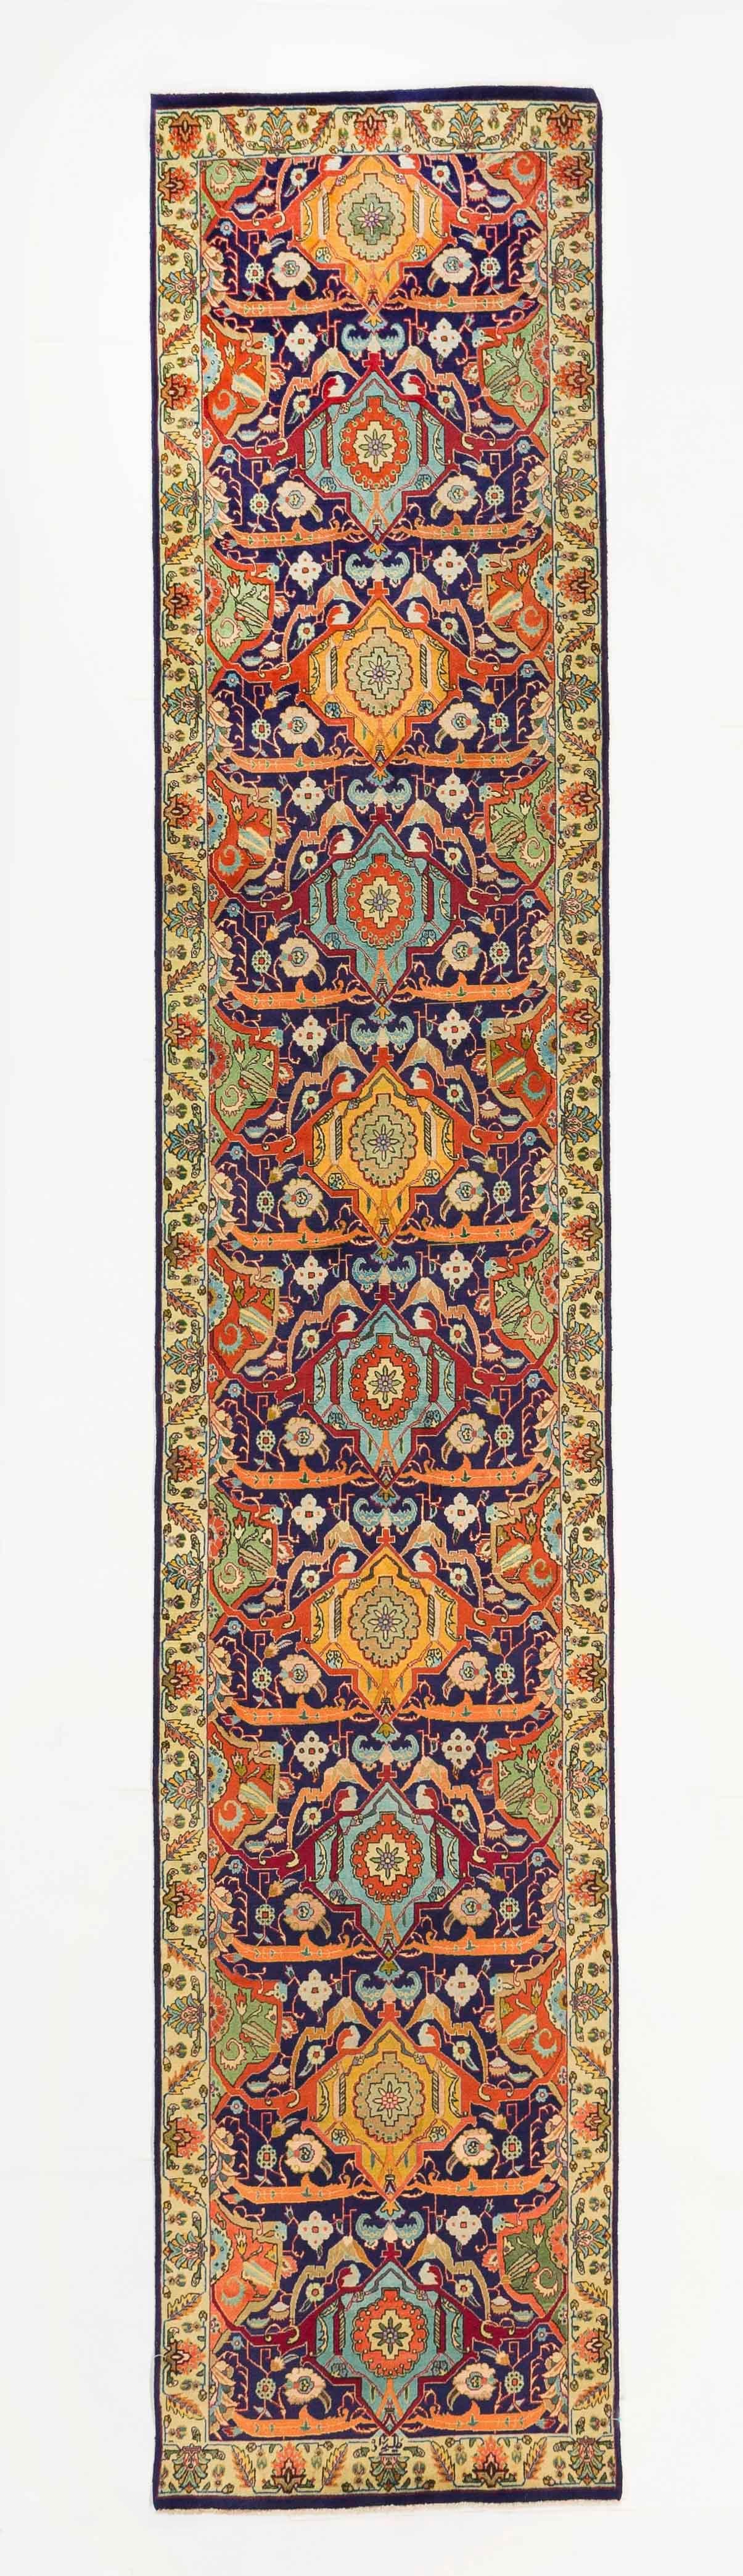 Special Twin Antique Persian Rug in Ornate Tabriz Design Circa 1950’s In Excellent Condition For Sale In Dallas, TX